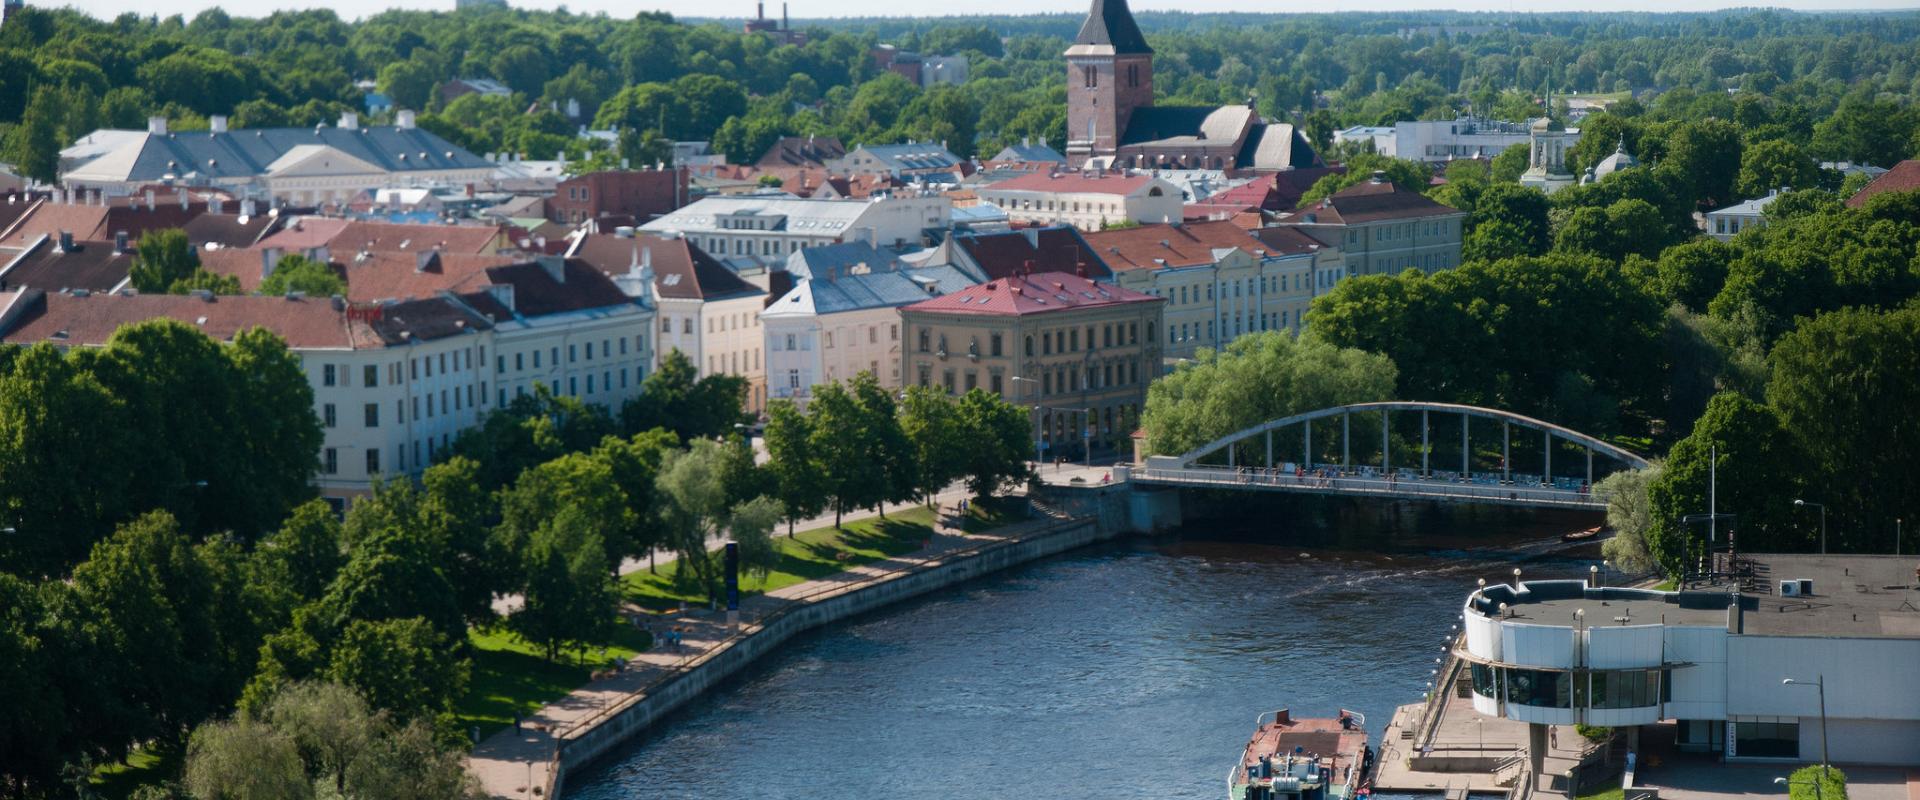 Arch Bridge and ship cruises in summer Tartu